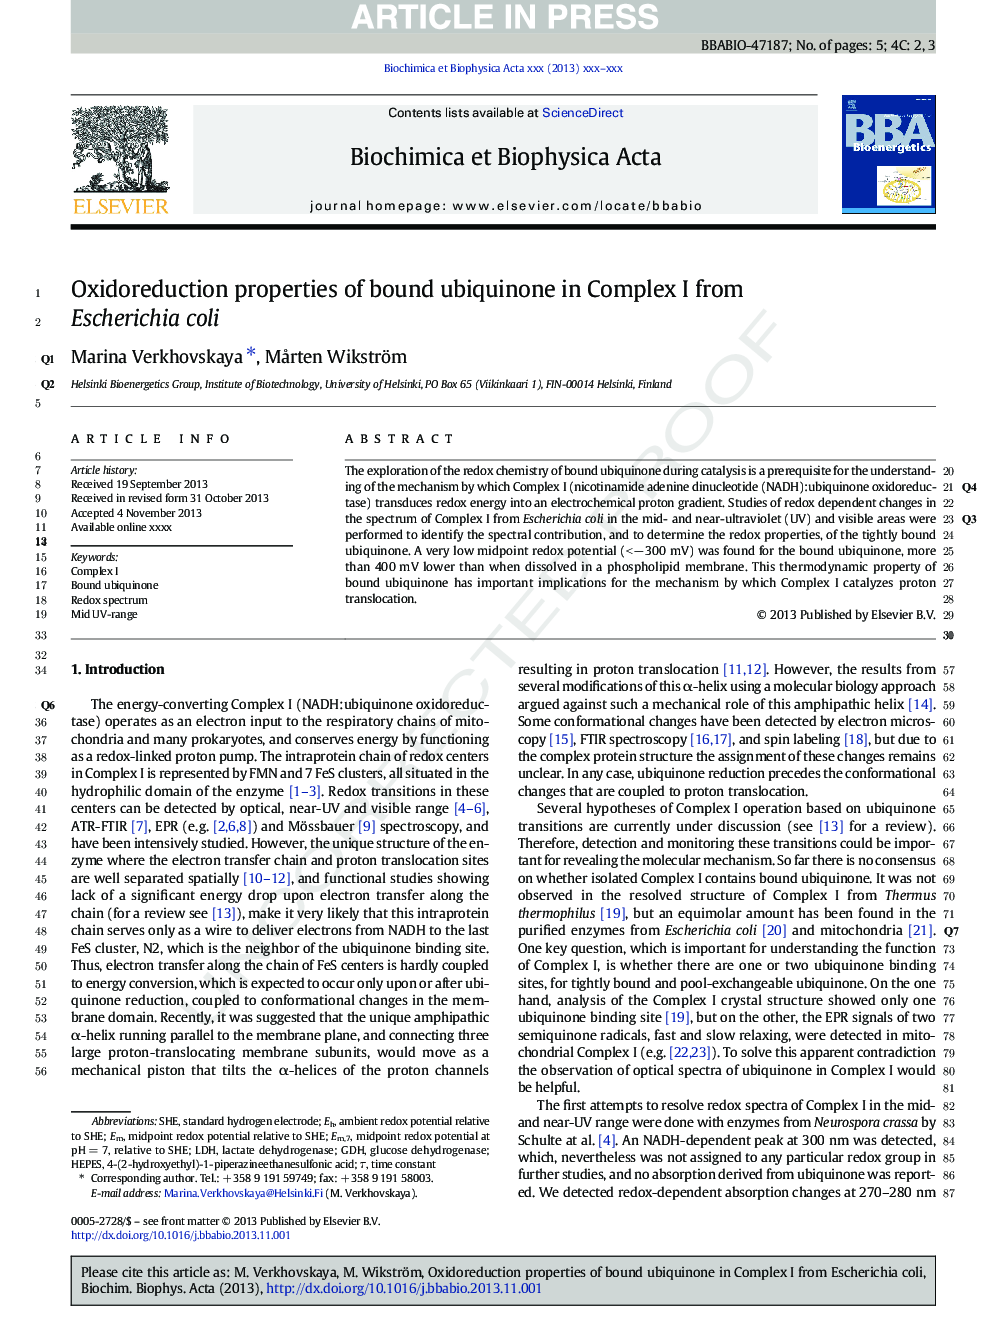 Oxidoreduction properties of bound ubiquinone in Complex I from Escherichia coli